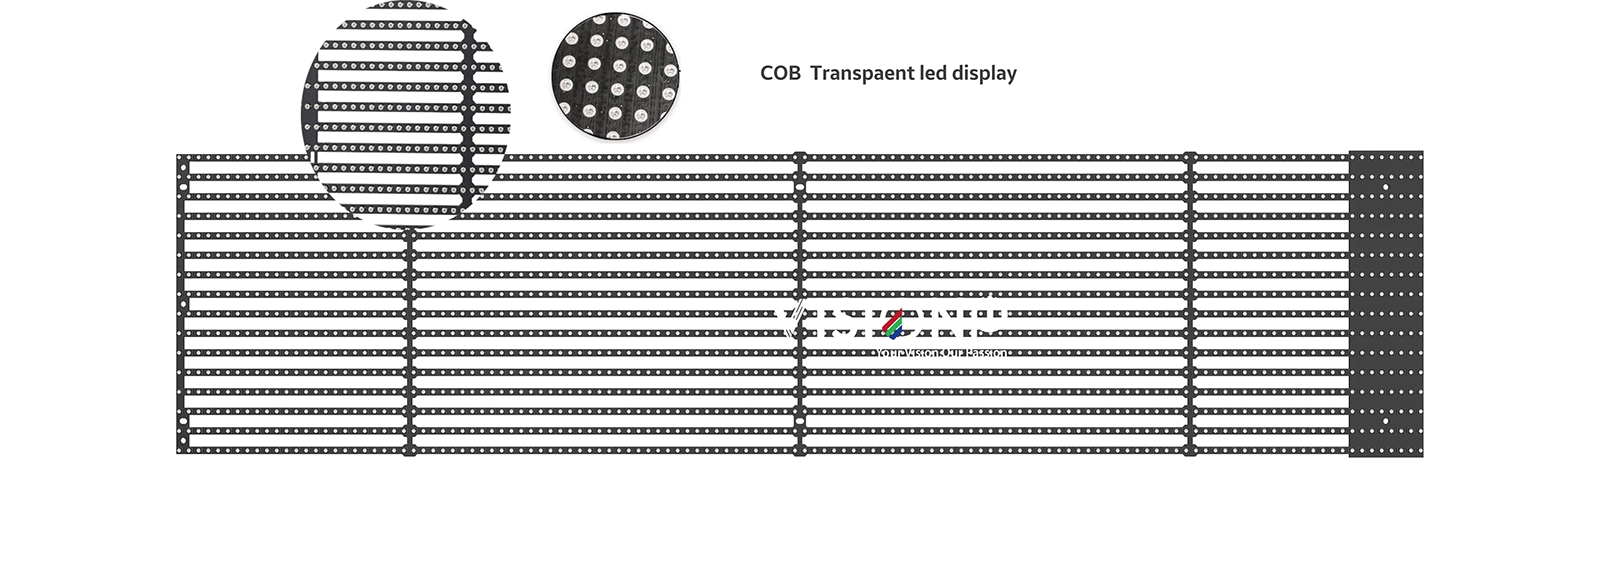 cob transparent led display